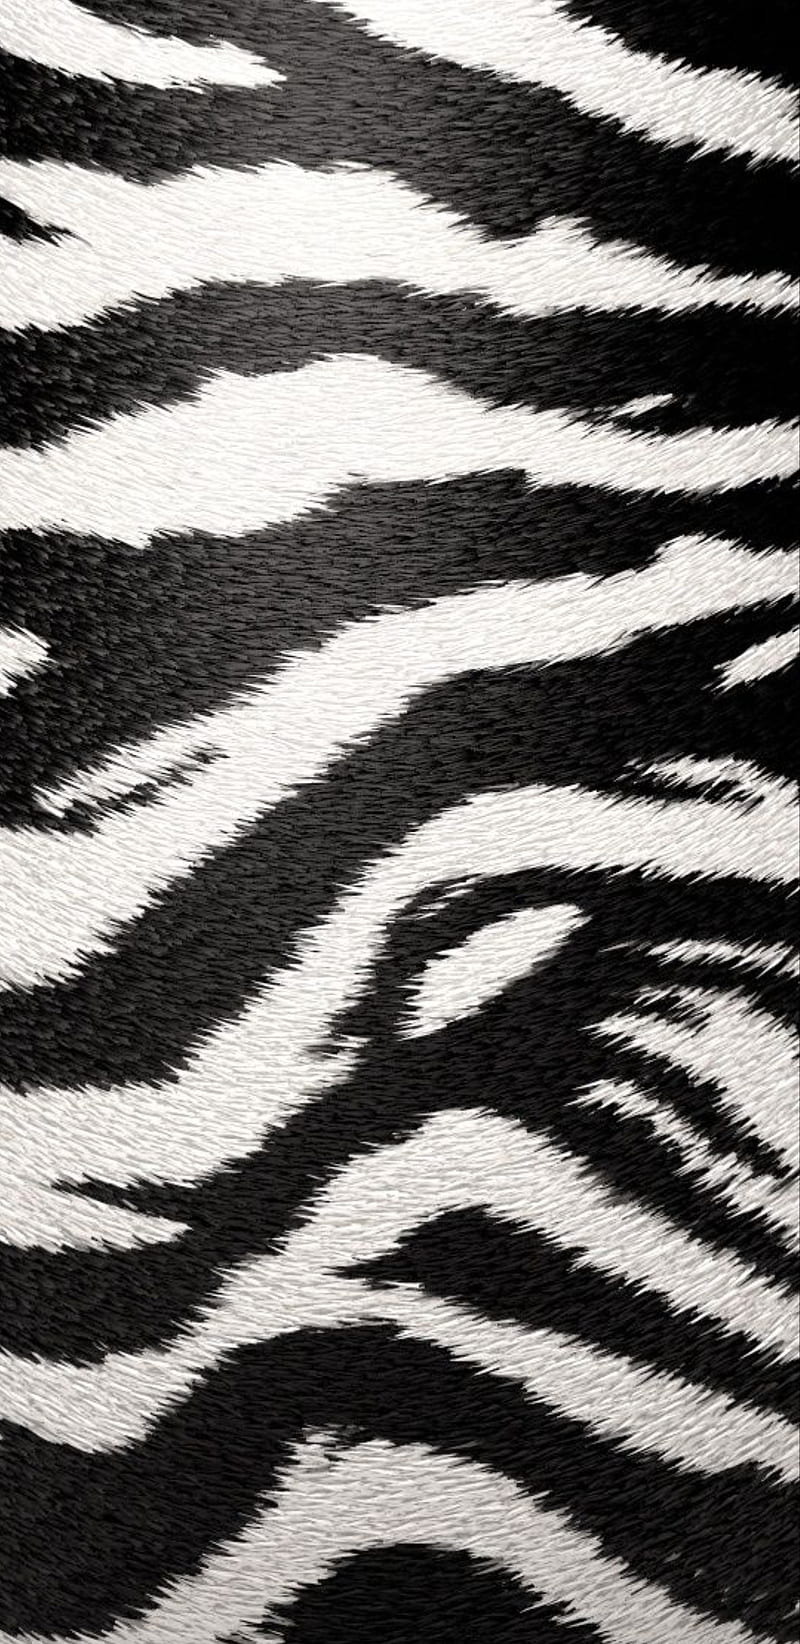 Download wallpaper 800x1200 zebra lake art animal wildlife iphone 4s4  for parallax hd background